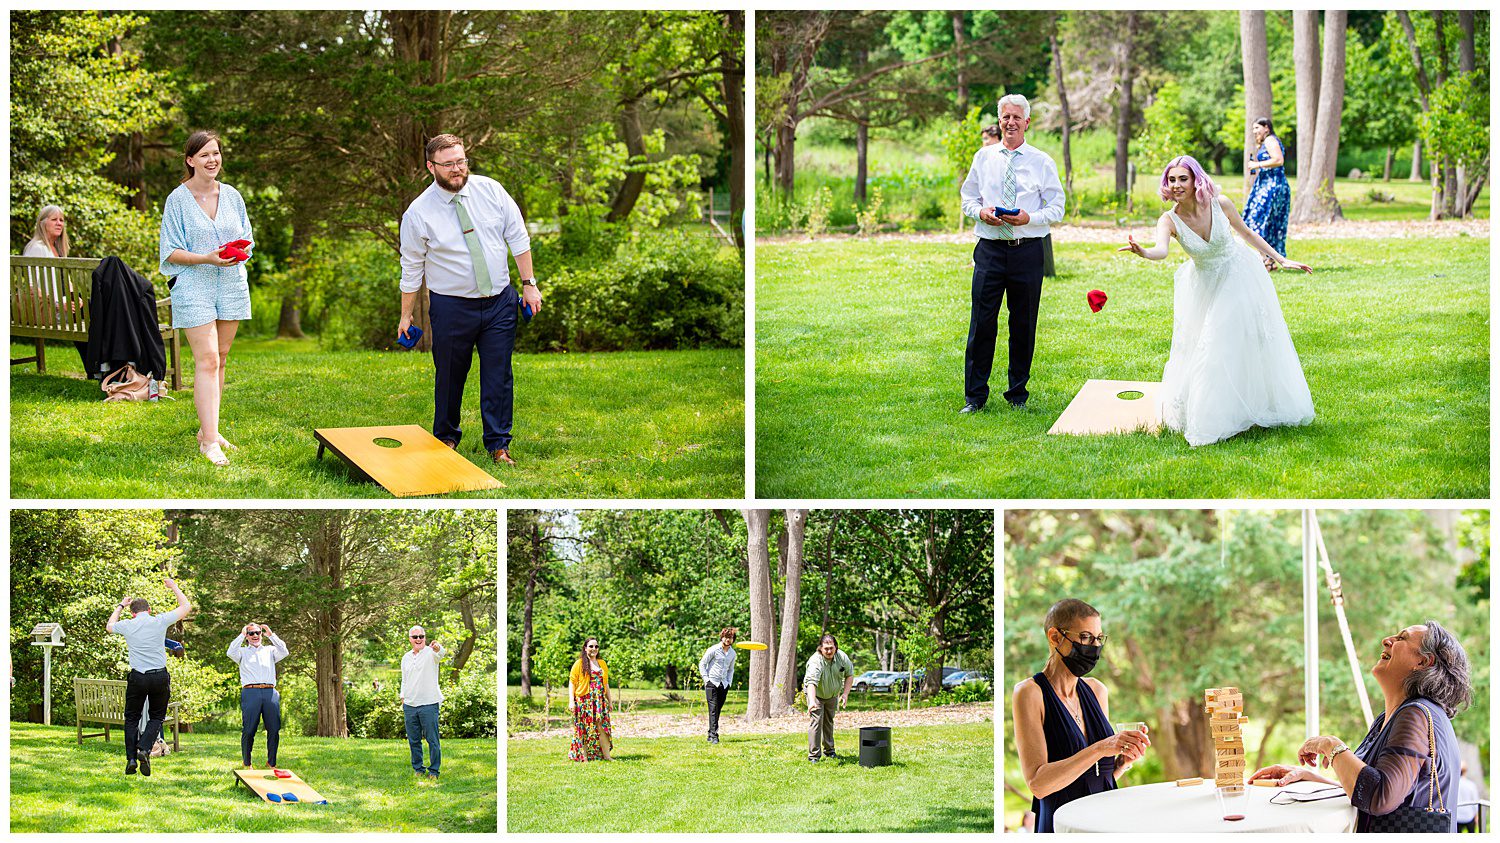 Lawn Games at Wedding Reception 